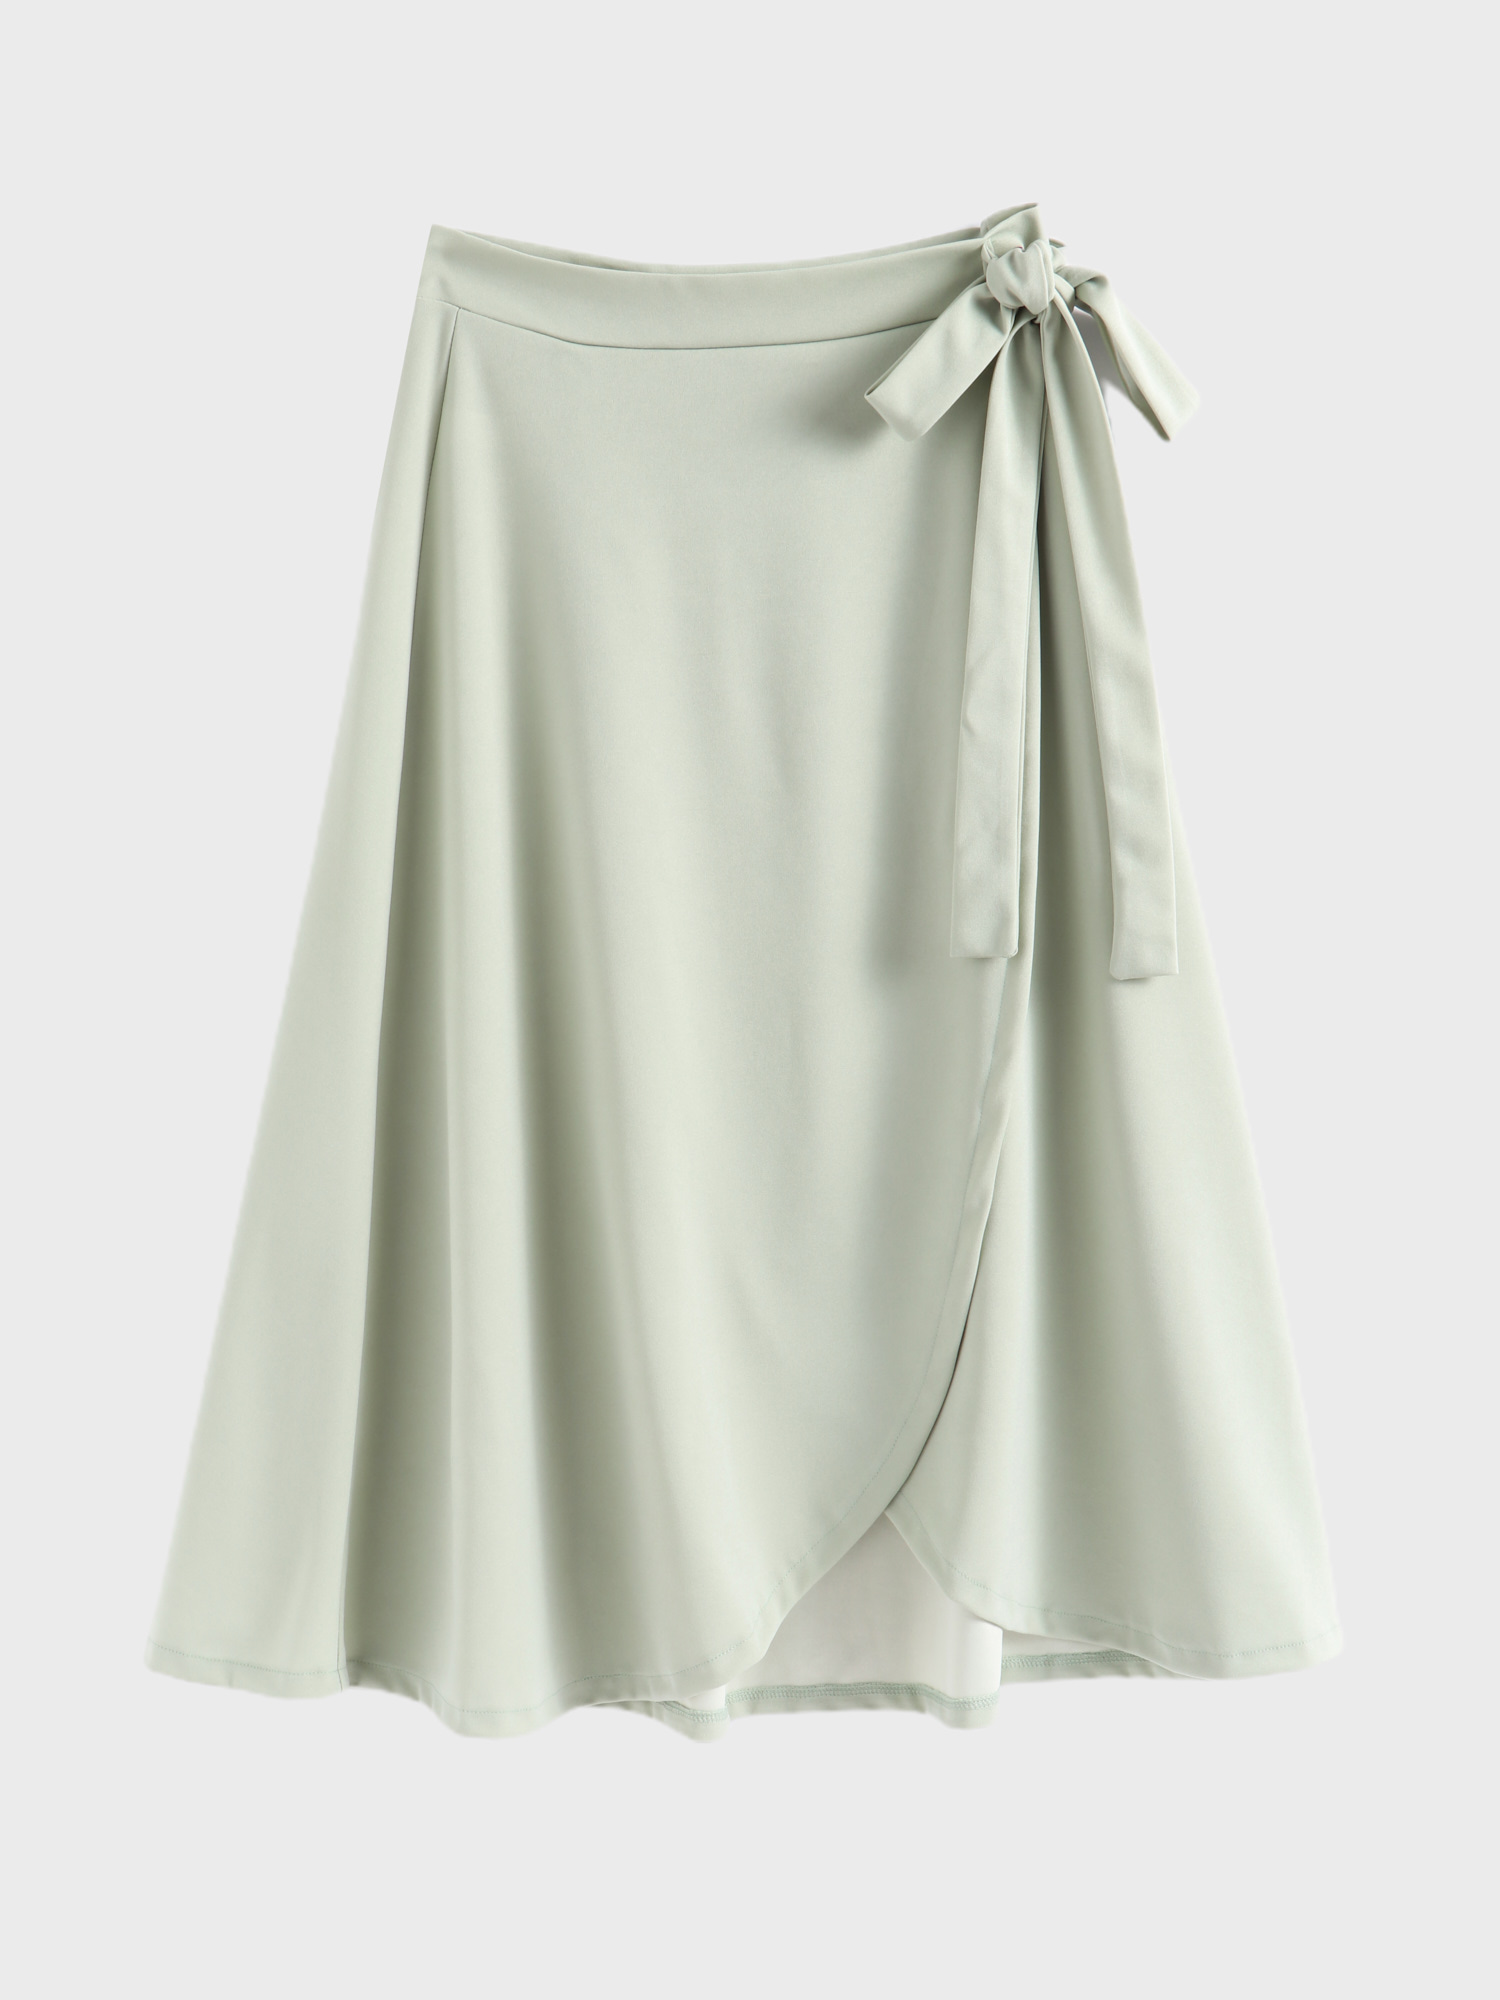 Green Midsize High Waist Tie Chiffon Ruffle Skirt | Hemwave - Midsize Fashion